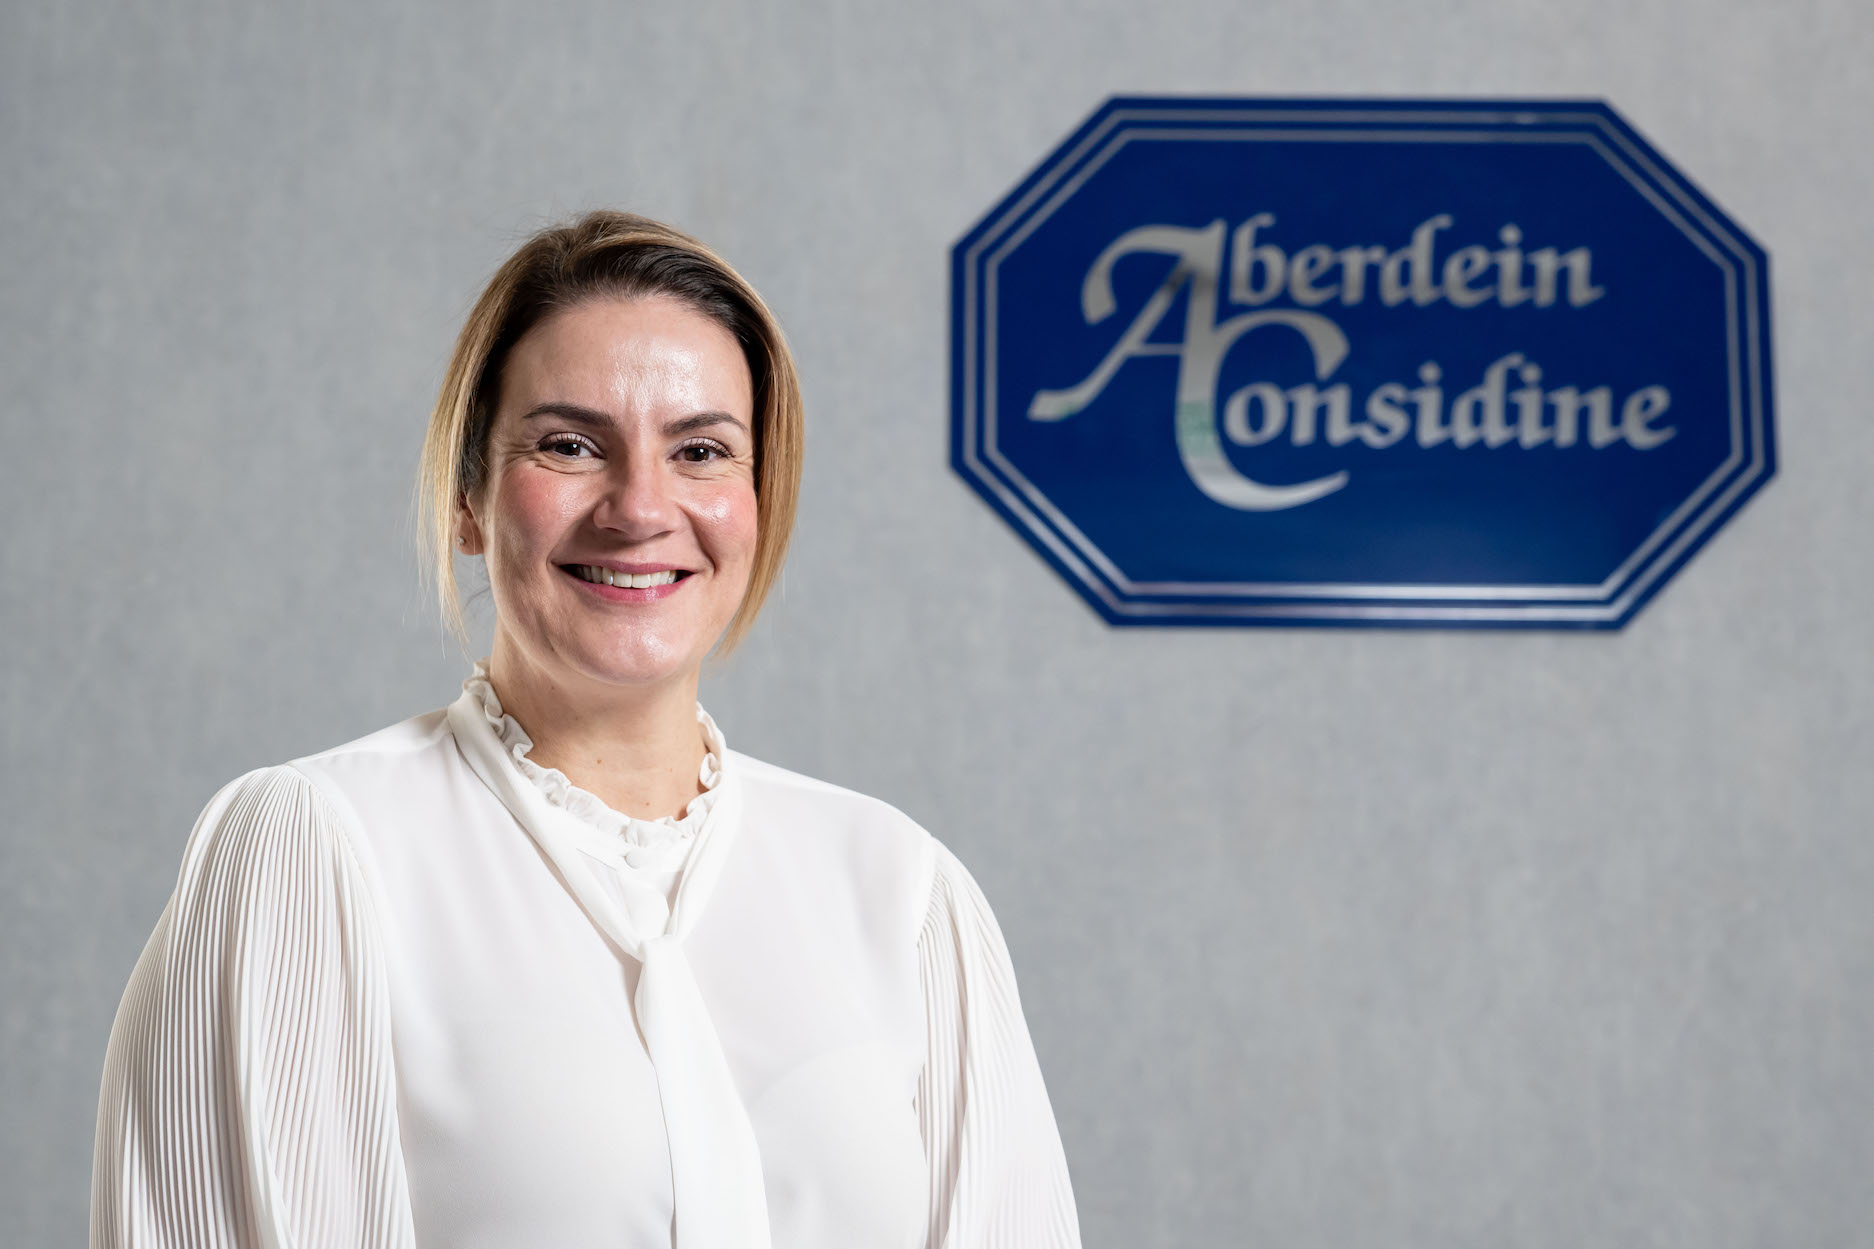 Aberdein Considine hires Compliance Director for Wealth Management business